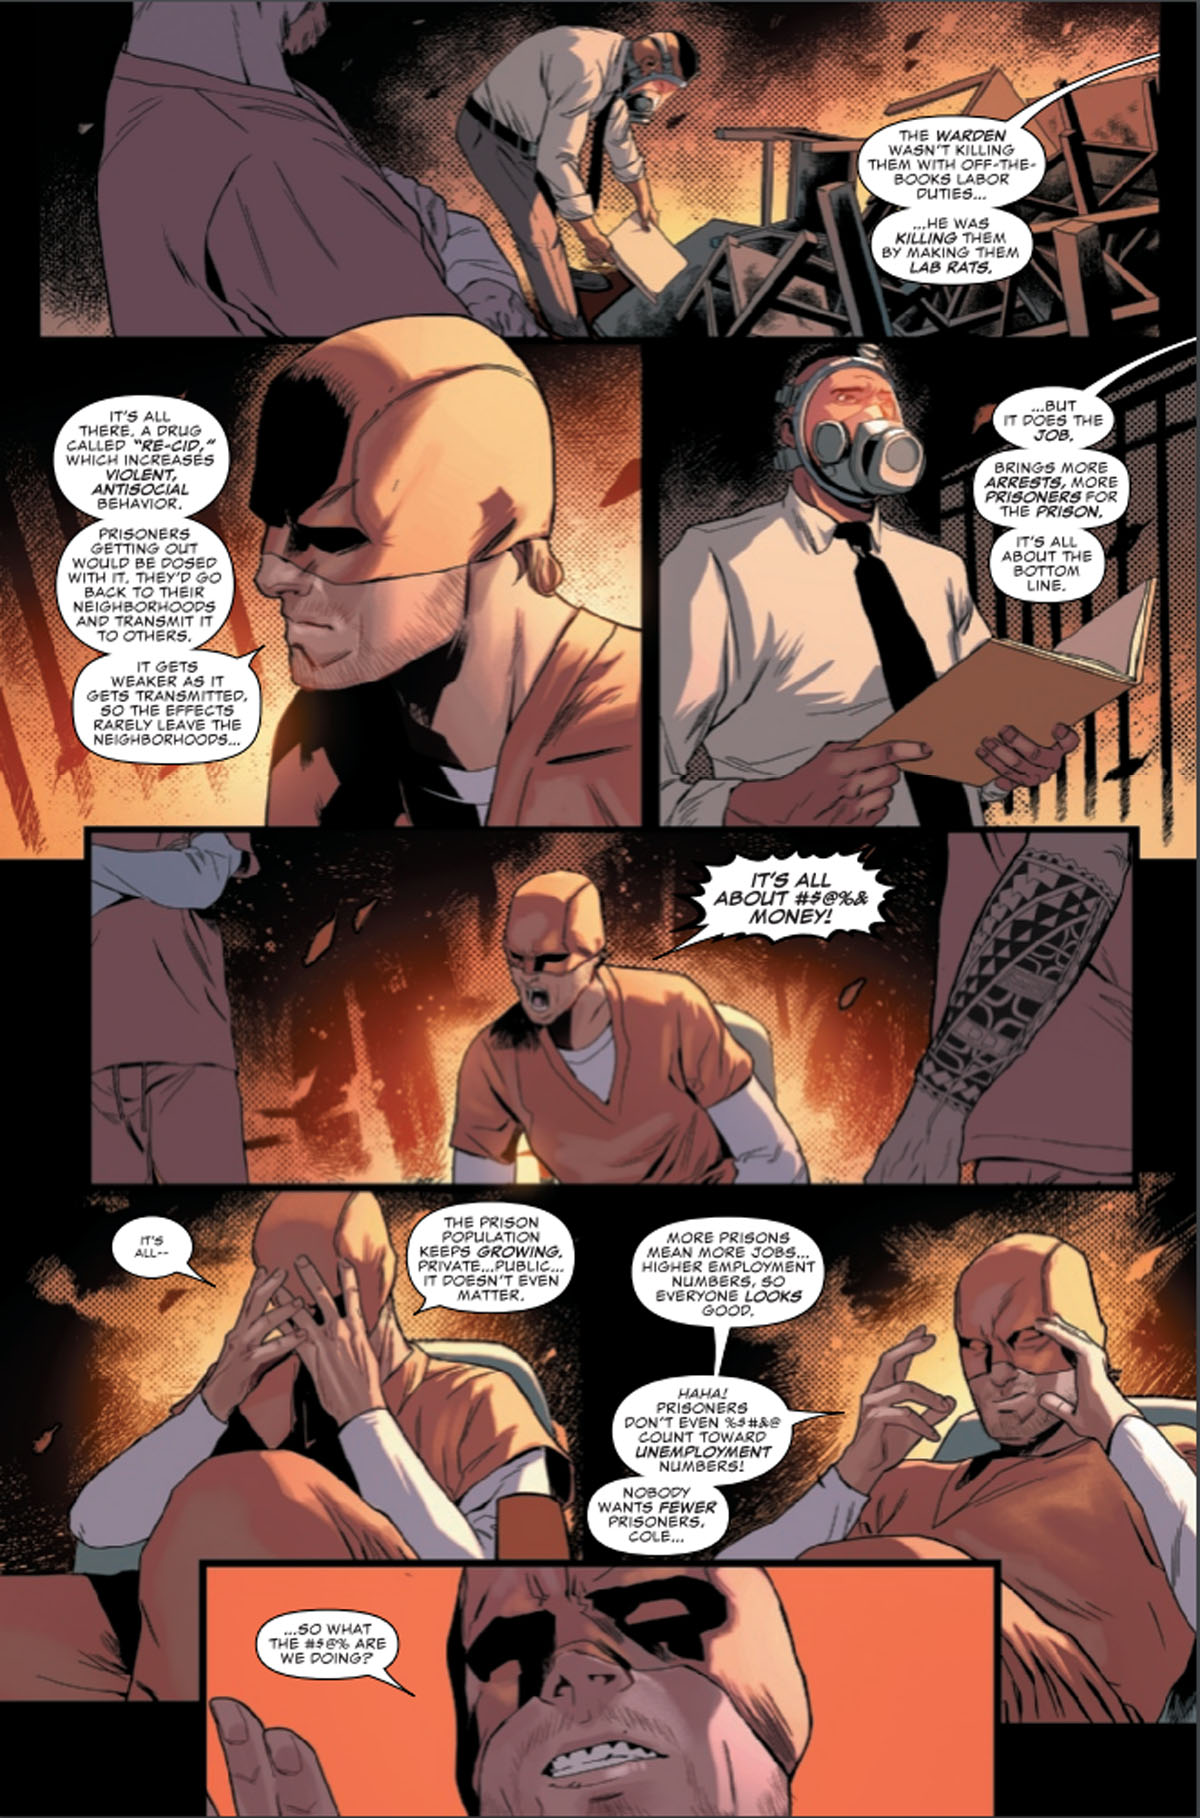 Daredevil #34 page 2